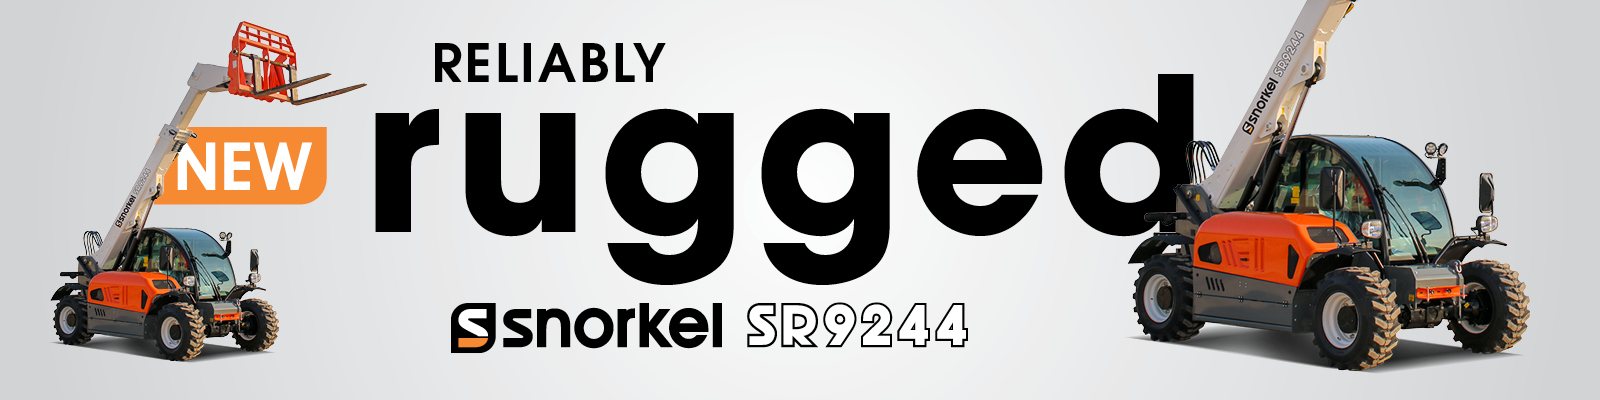 Reliably Rugged Snorkel S9244 rough terrain telehandler